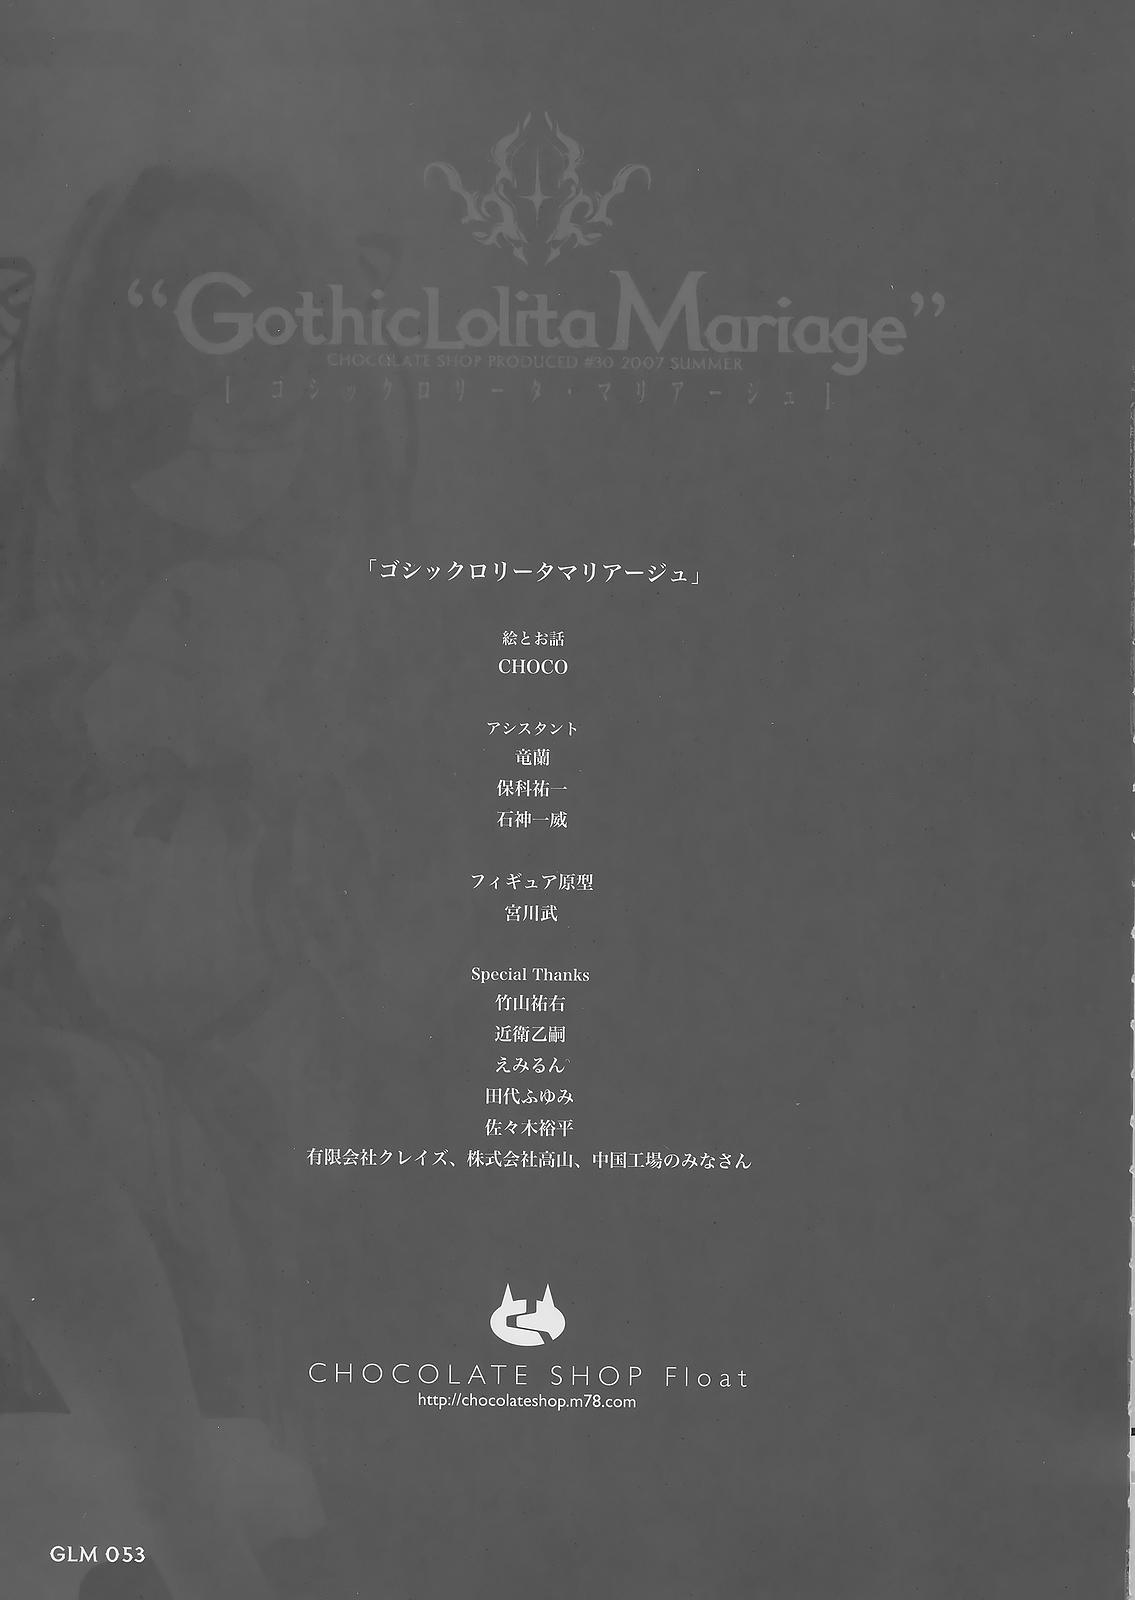 Gothic lolita Mariage 52